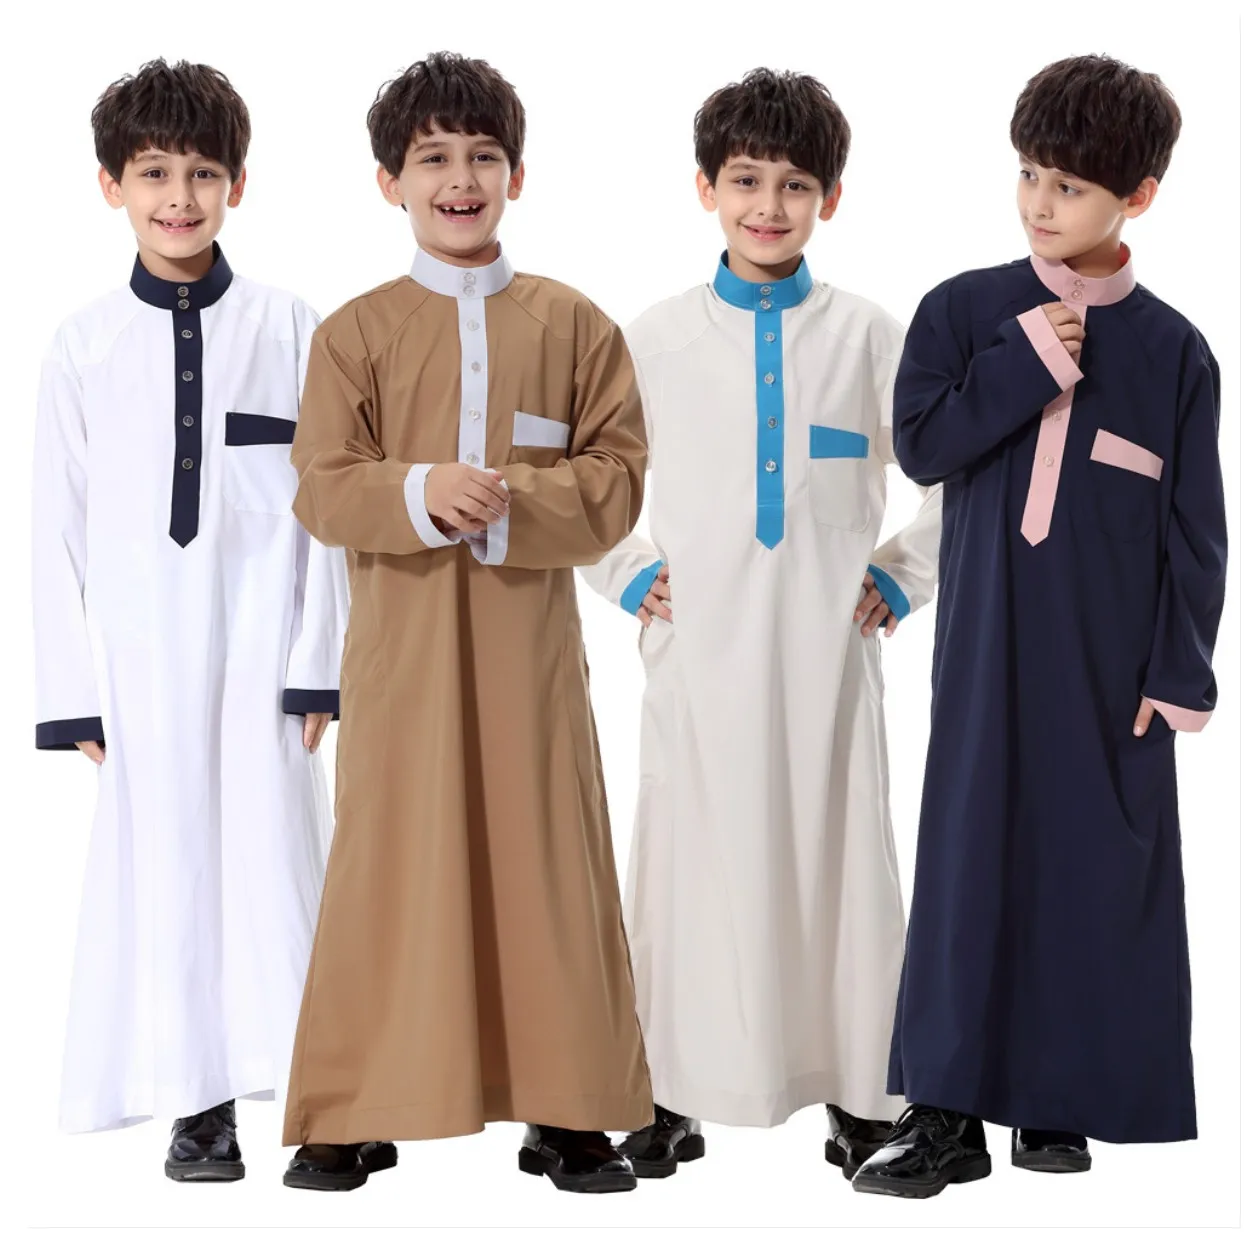 

Hot Sale Arabian Middle Eastern Muslim Teen Boy Thobe Robe Islamic Kids Abaya Clothing with Pocket, White, beige, navy, camel